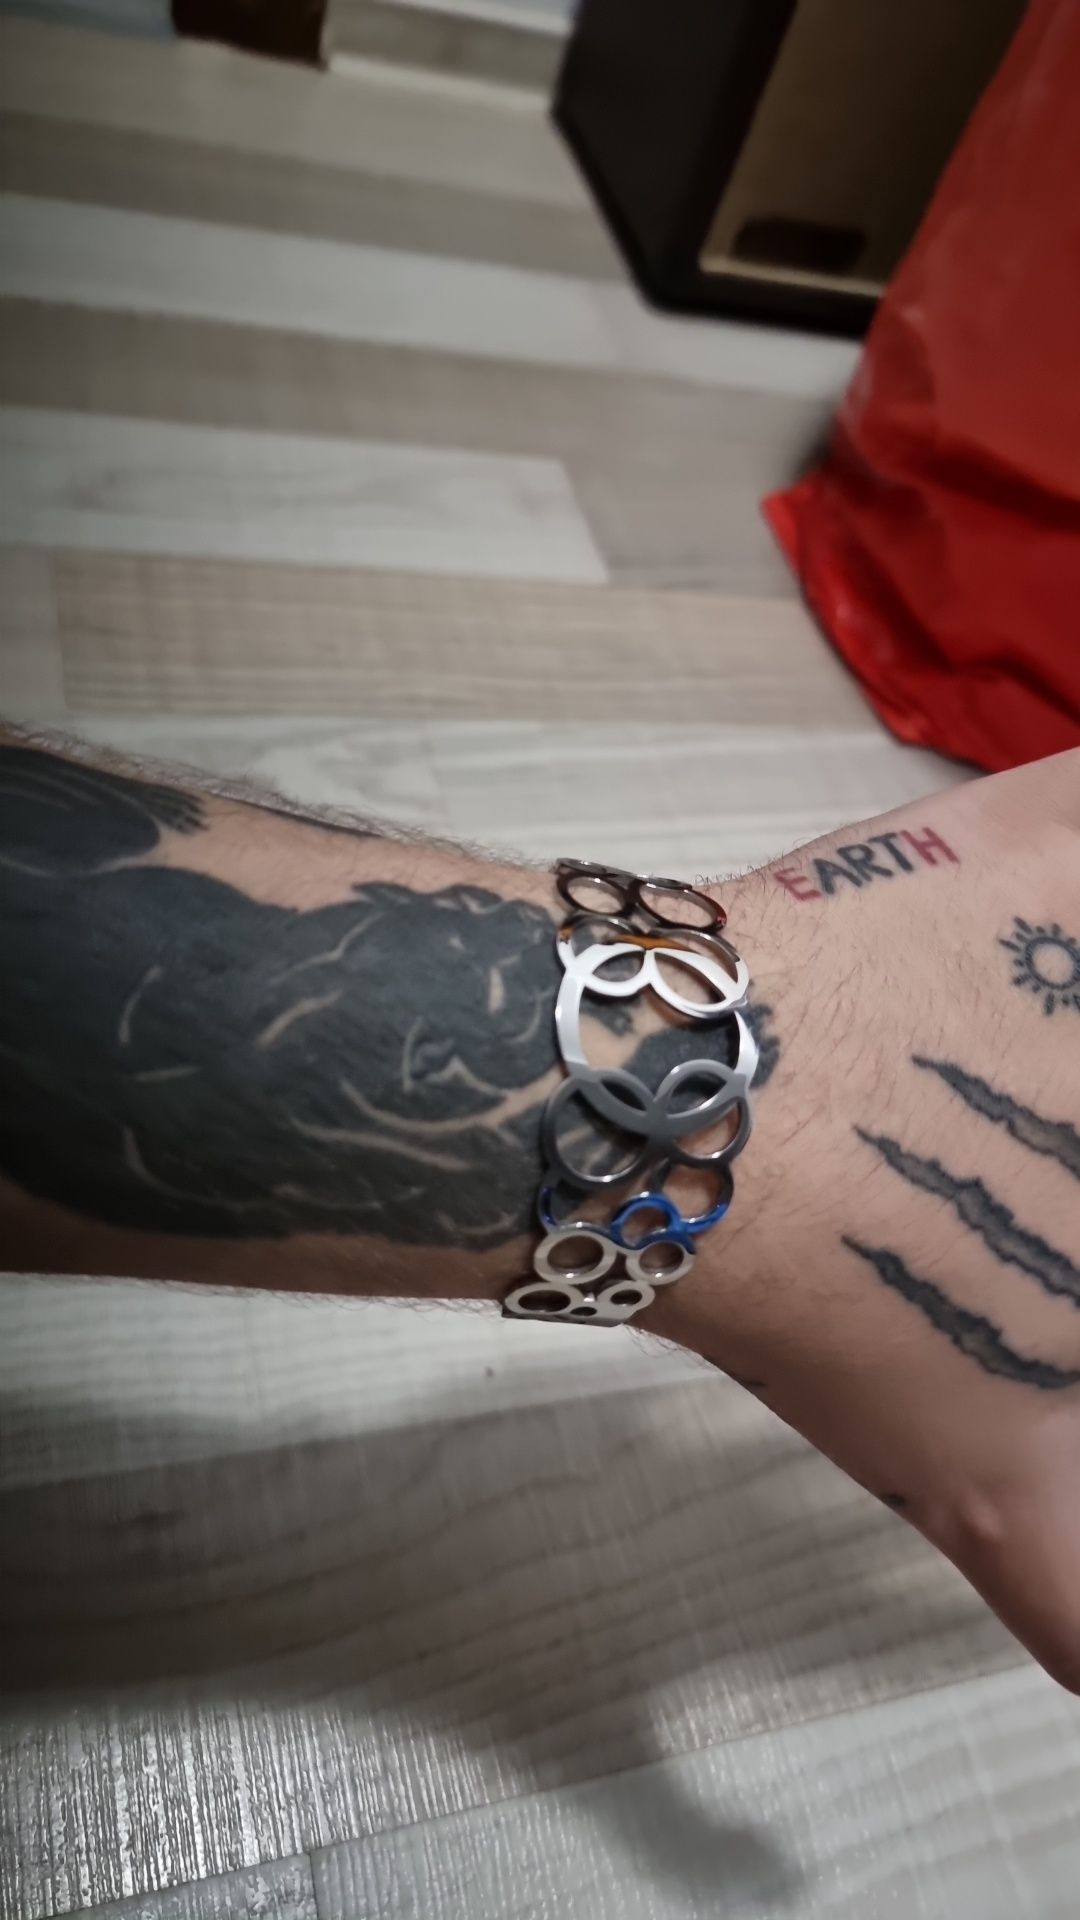 Bratara barbat handcuff stainless inox rock punk metal reglabila